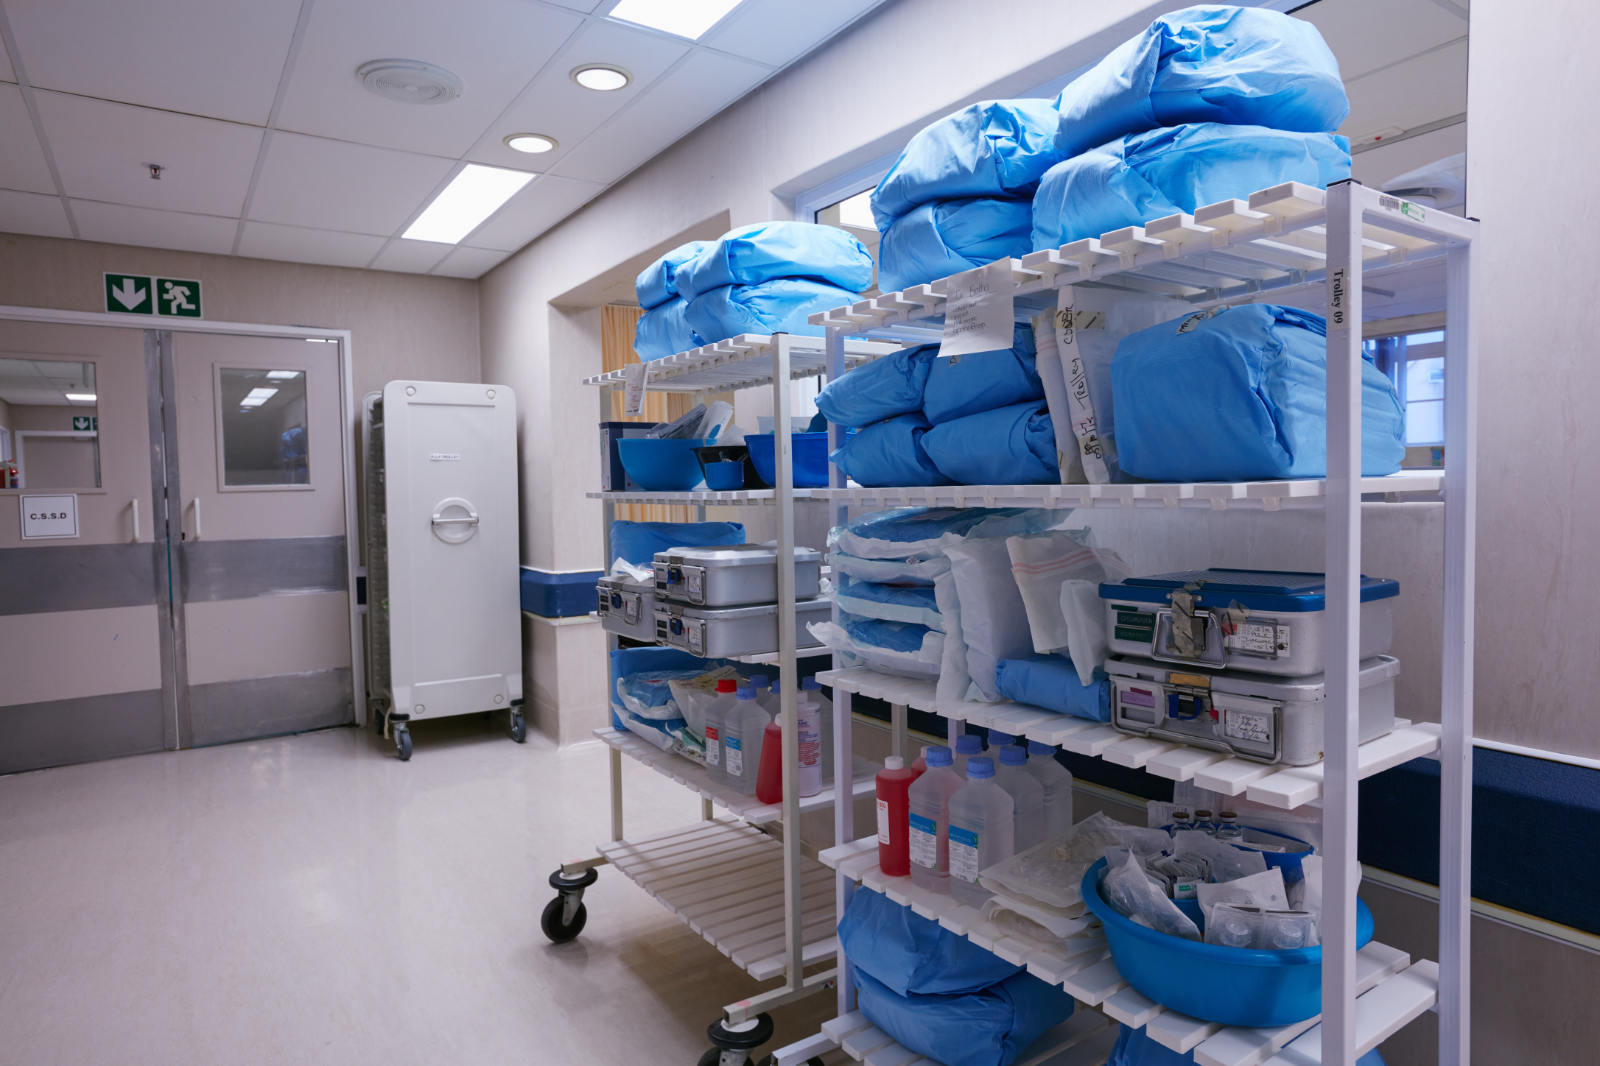 Hospital Use Storage Rack Manufacturers in Chennai